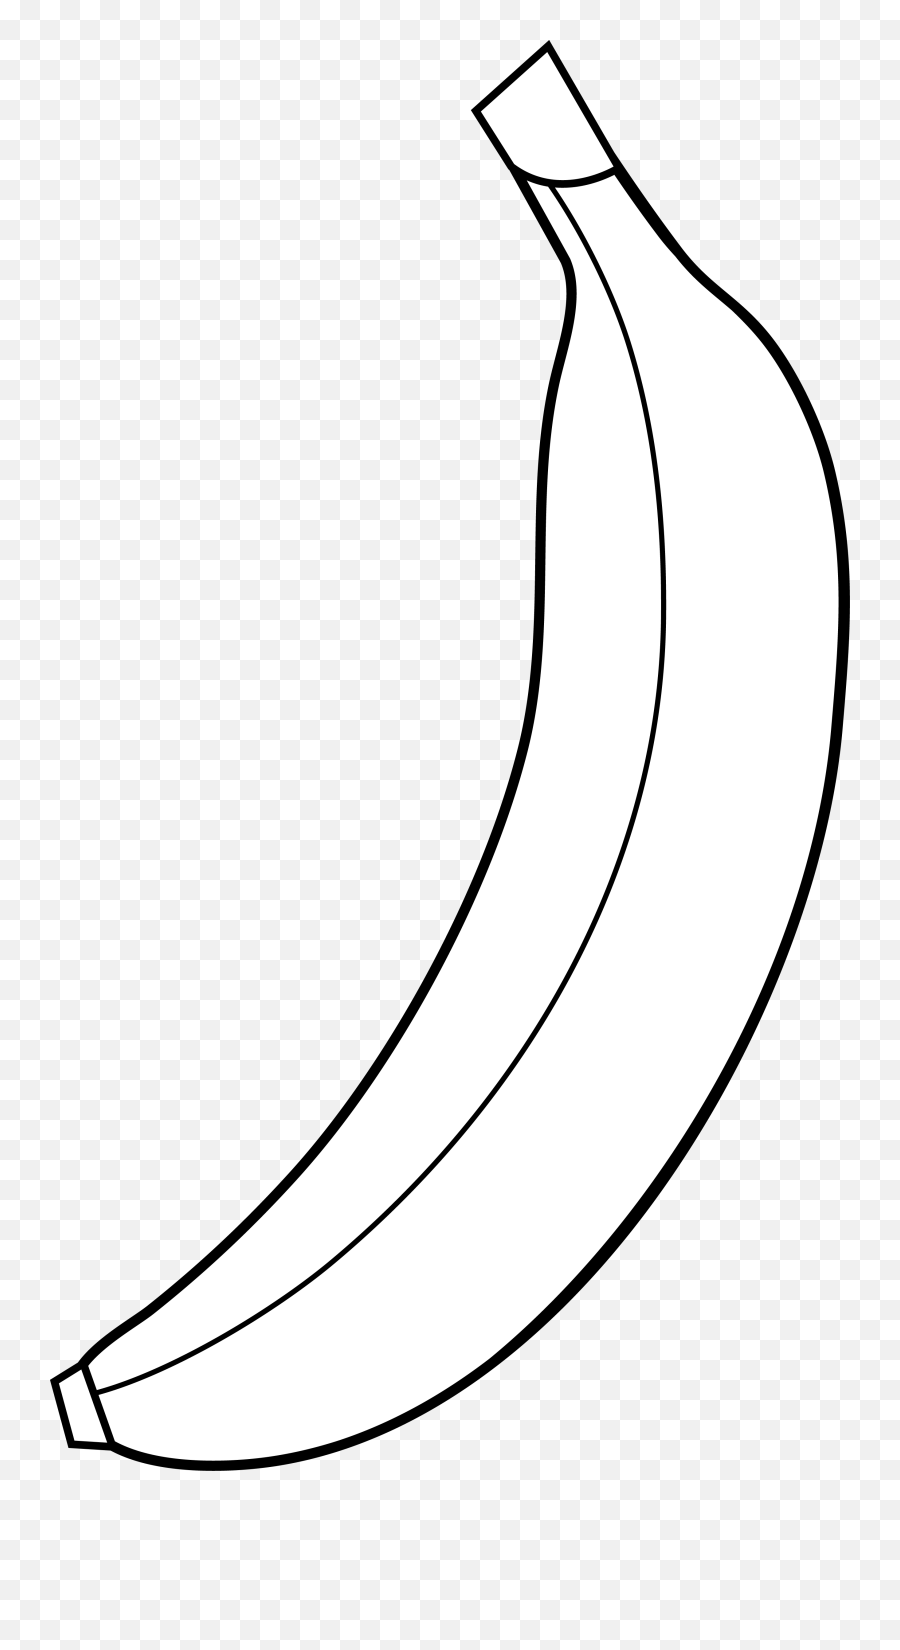 Black And White Banana Clipart Free - Banana Clipart Black And White Emoji,Banana Clipart